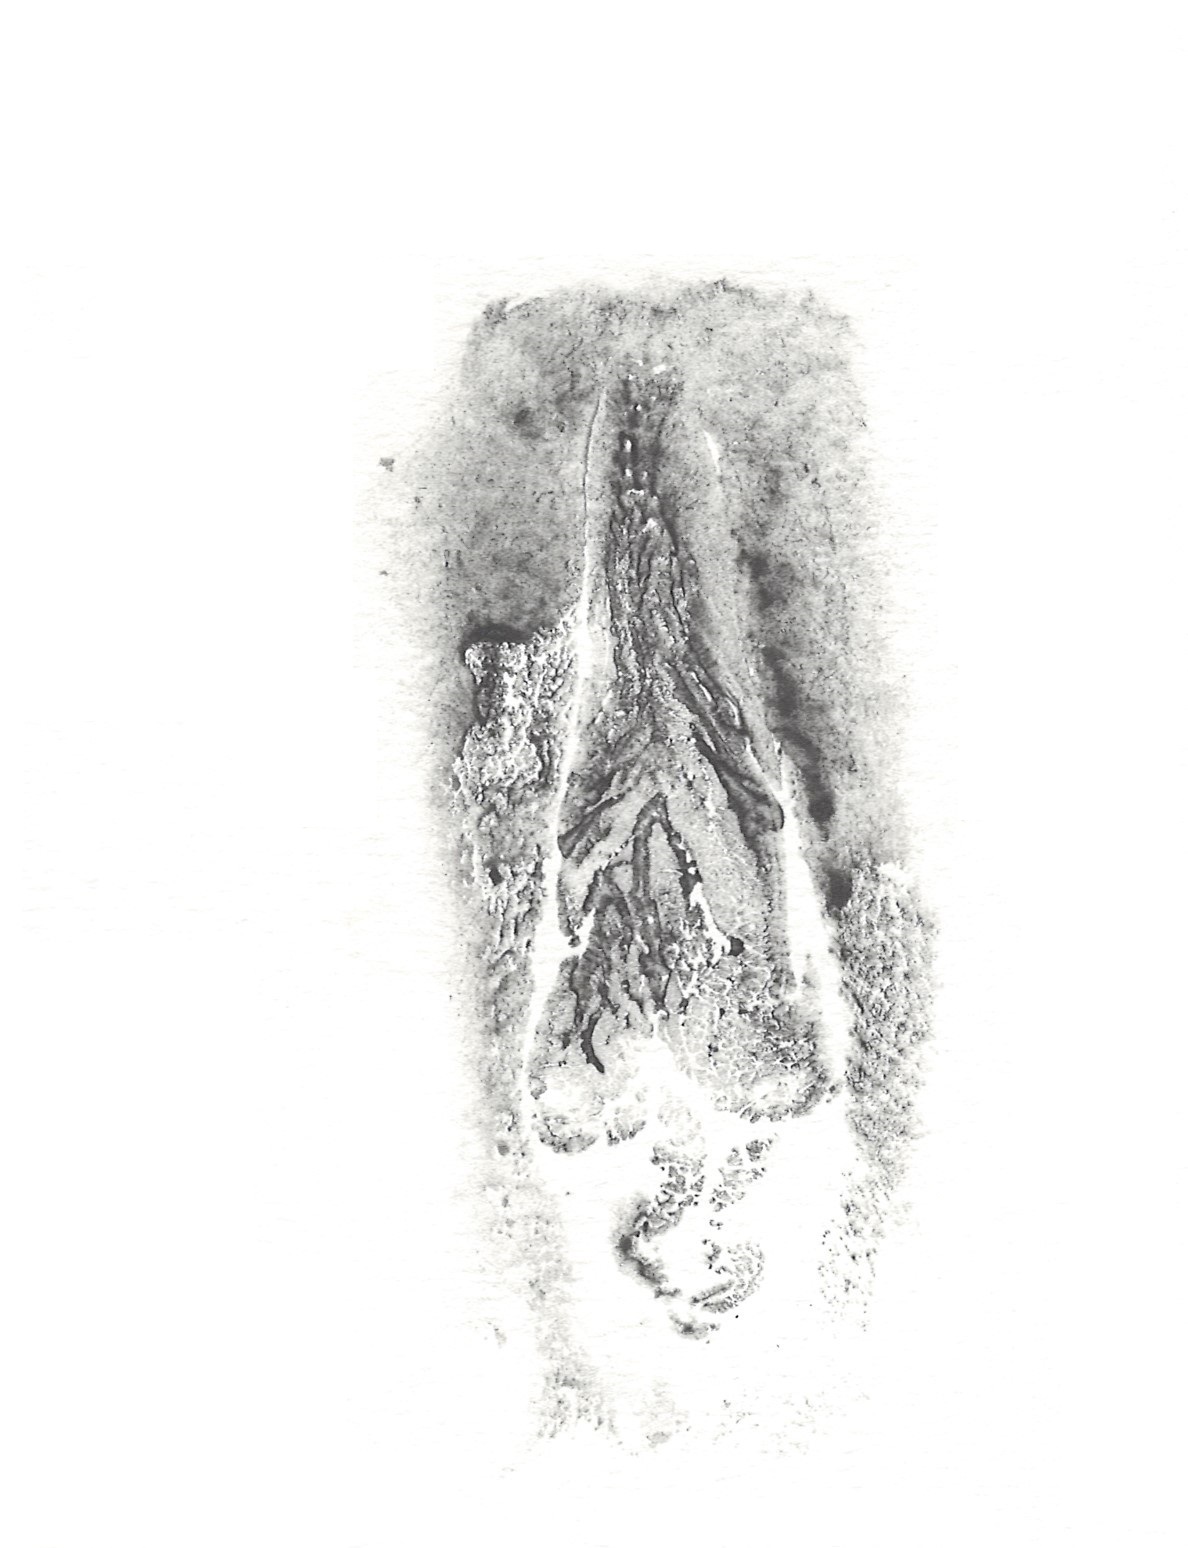 black print of vulva on white paper